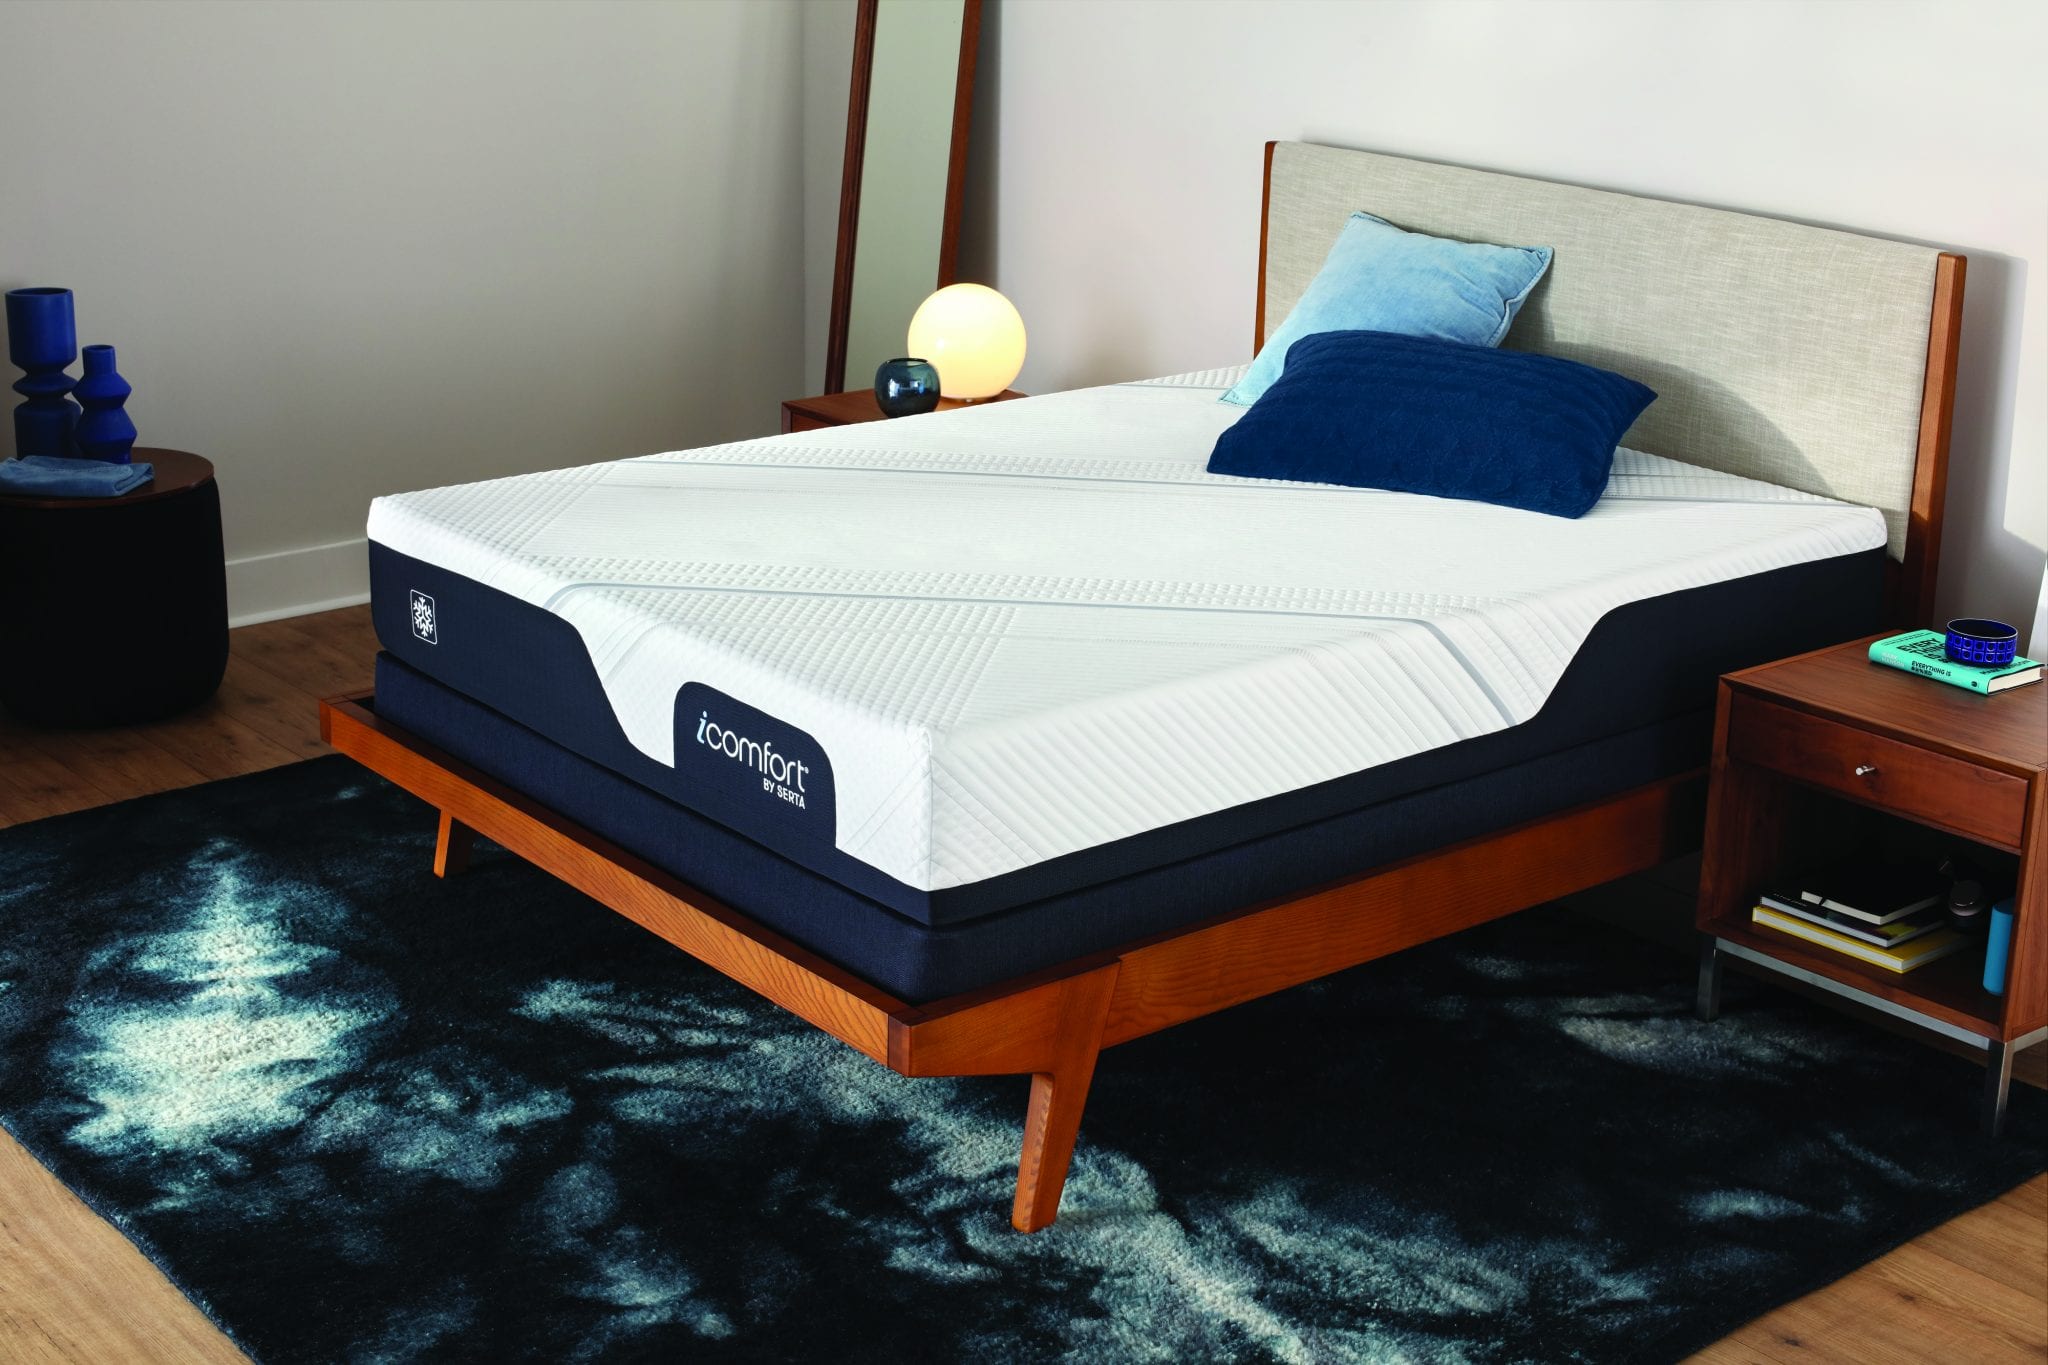 serta limited edition plush queen mattress